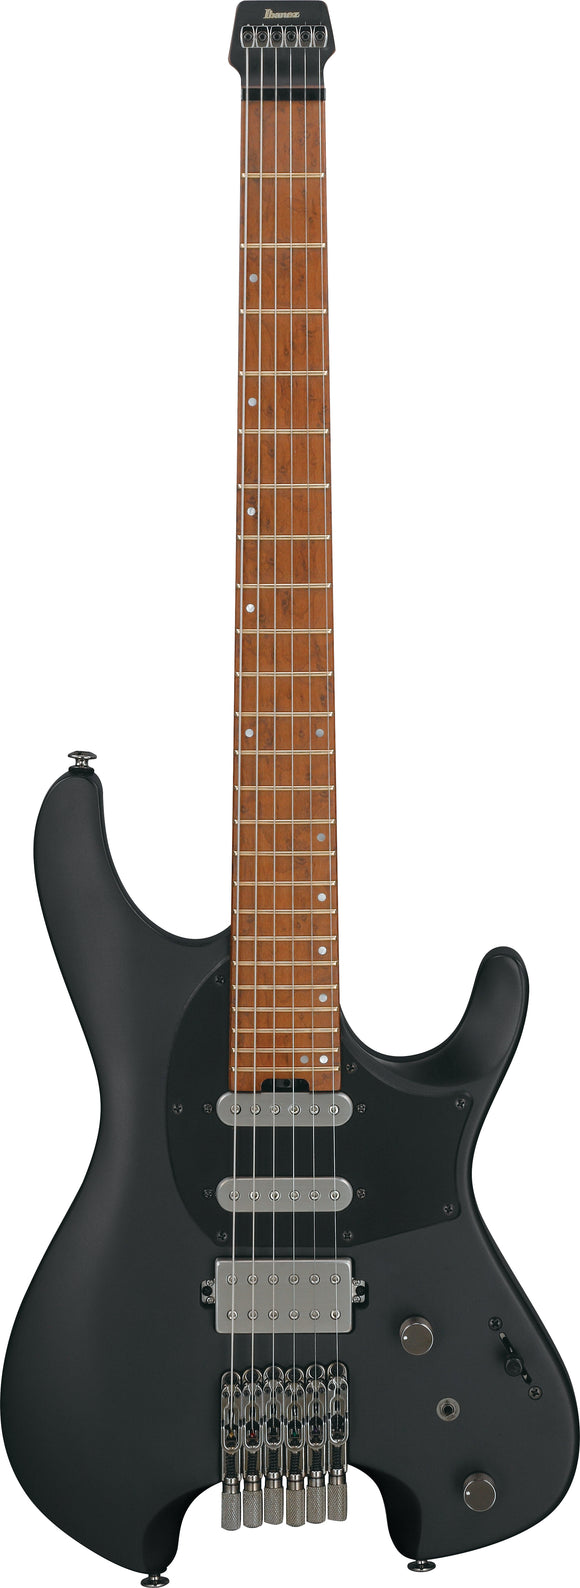 Ibanez Q54 Standard Electric Guitar - Black Flat